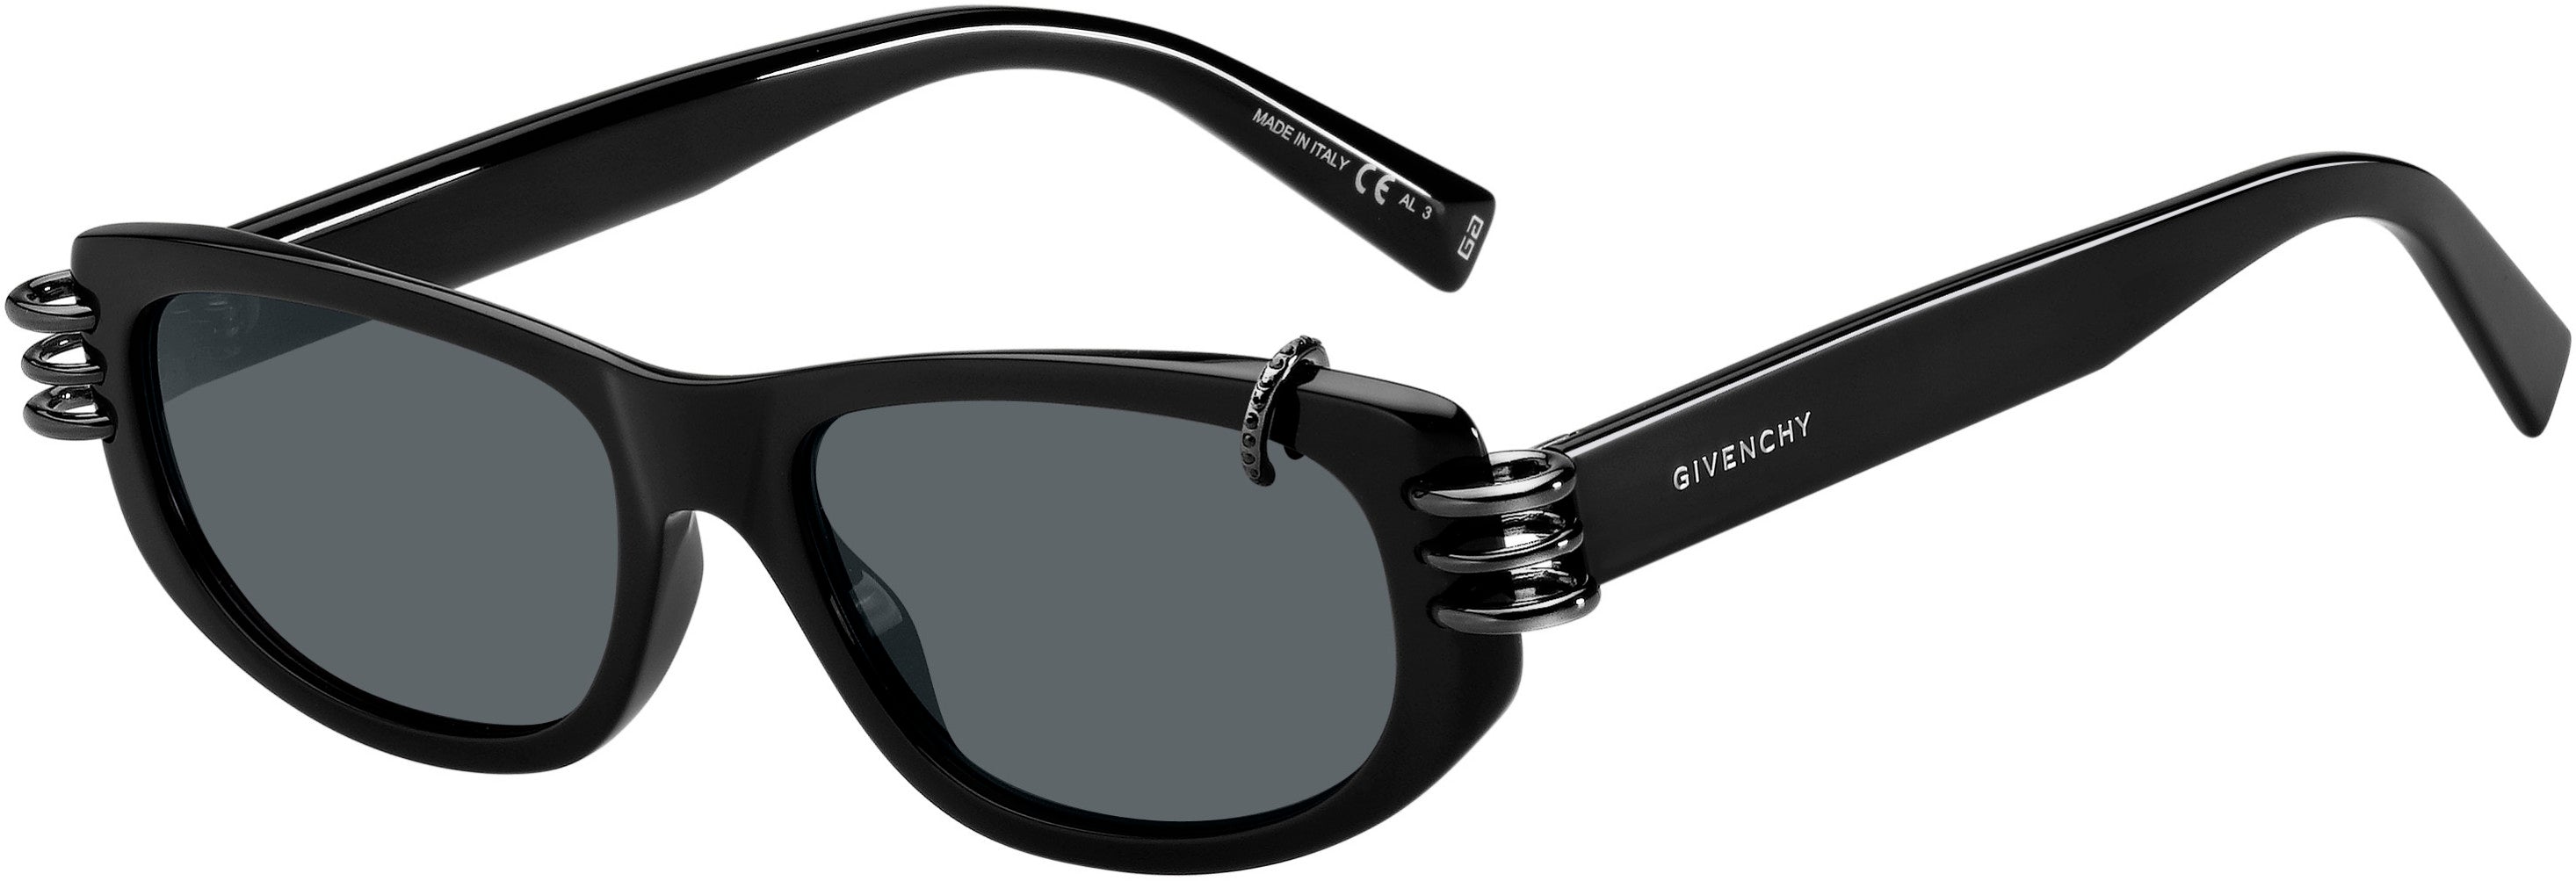  Givenchy 7176/S Rectangular Sunglasses 0807-0807  Black (IR Gray)